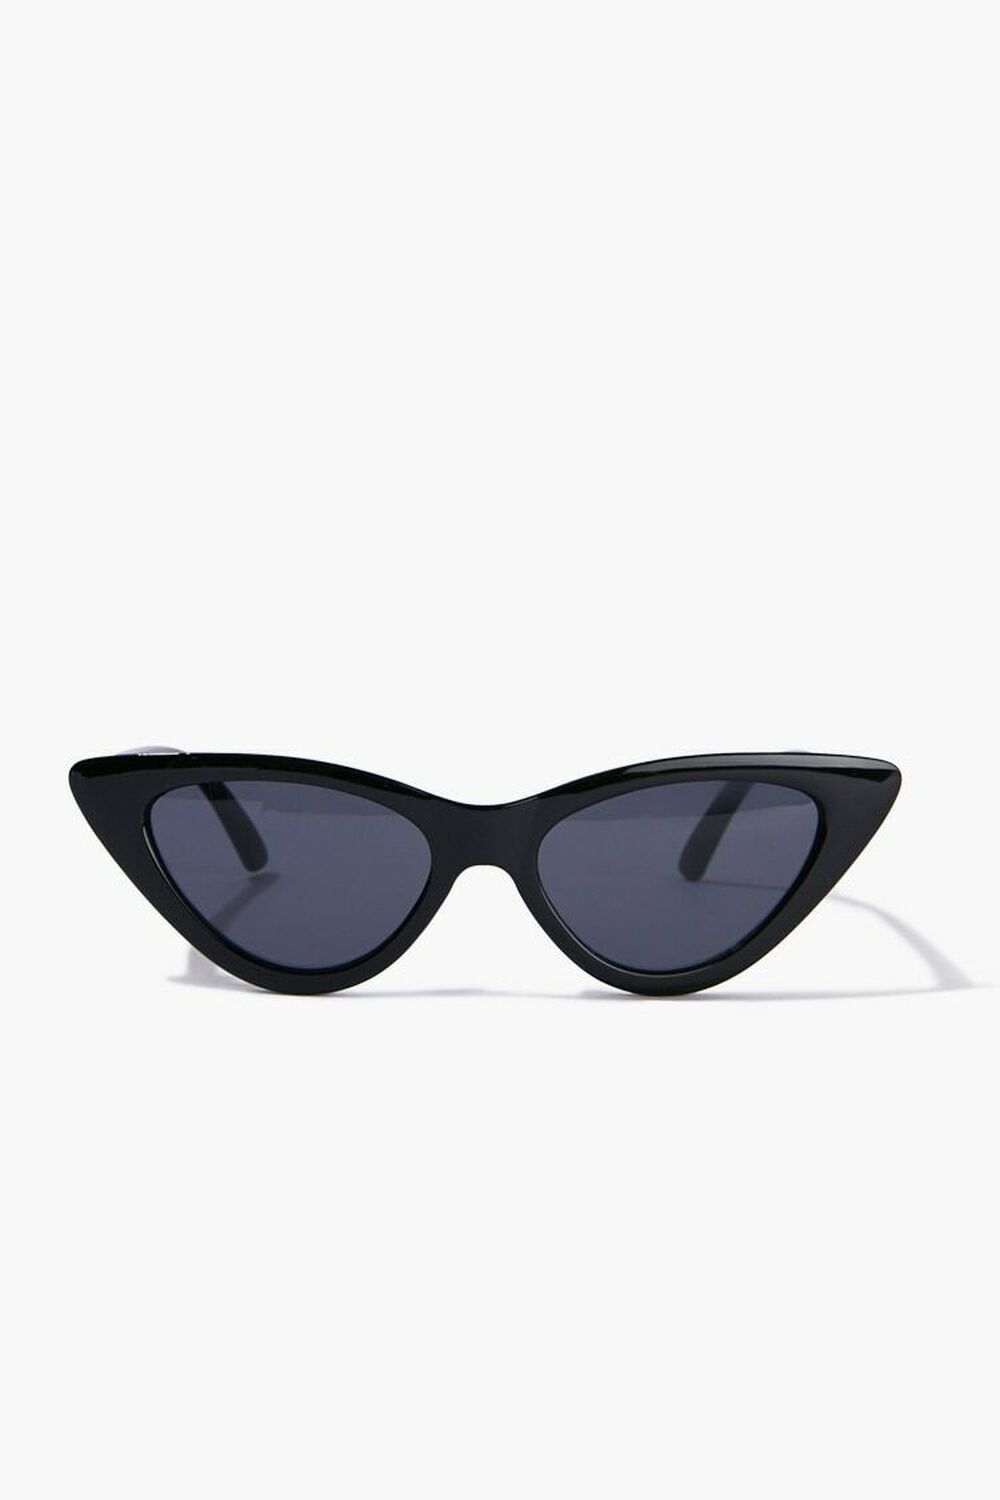 BLACK Skinny Cat-Eye Sunglasses, image 1